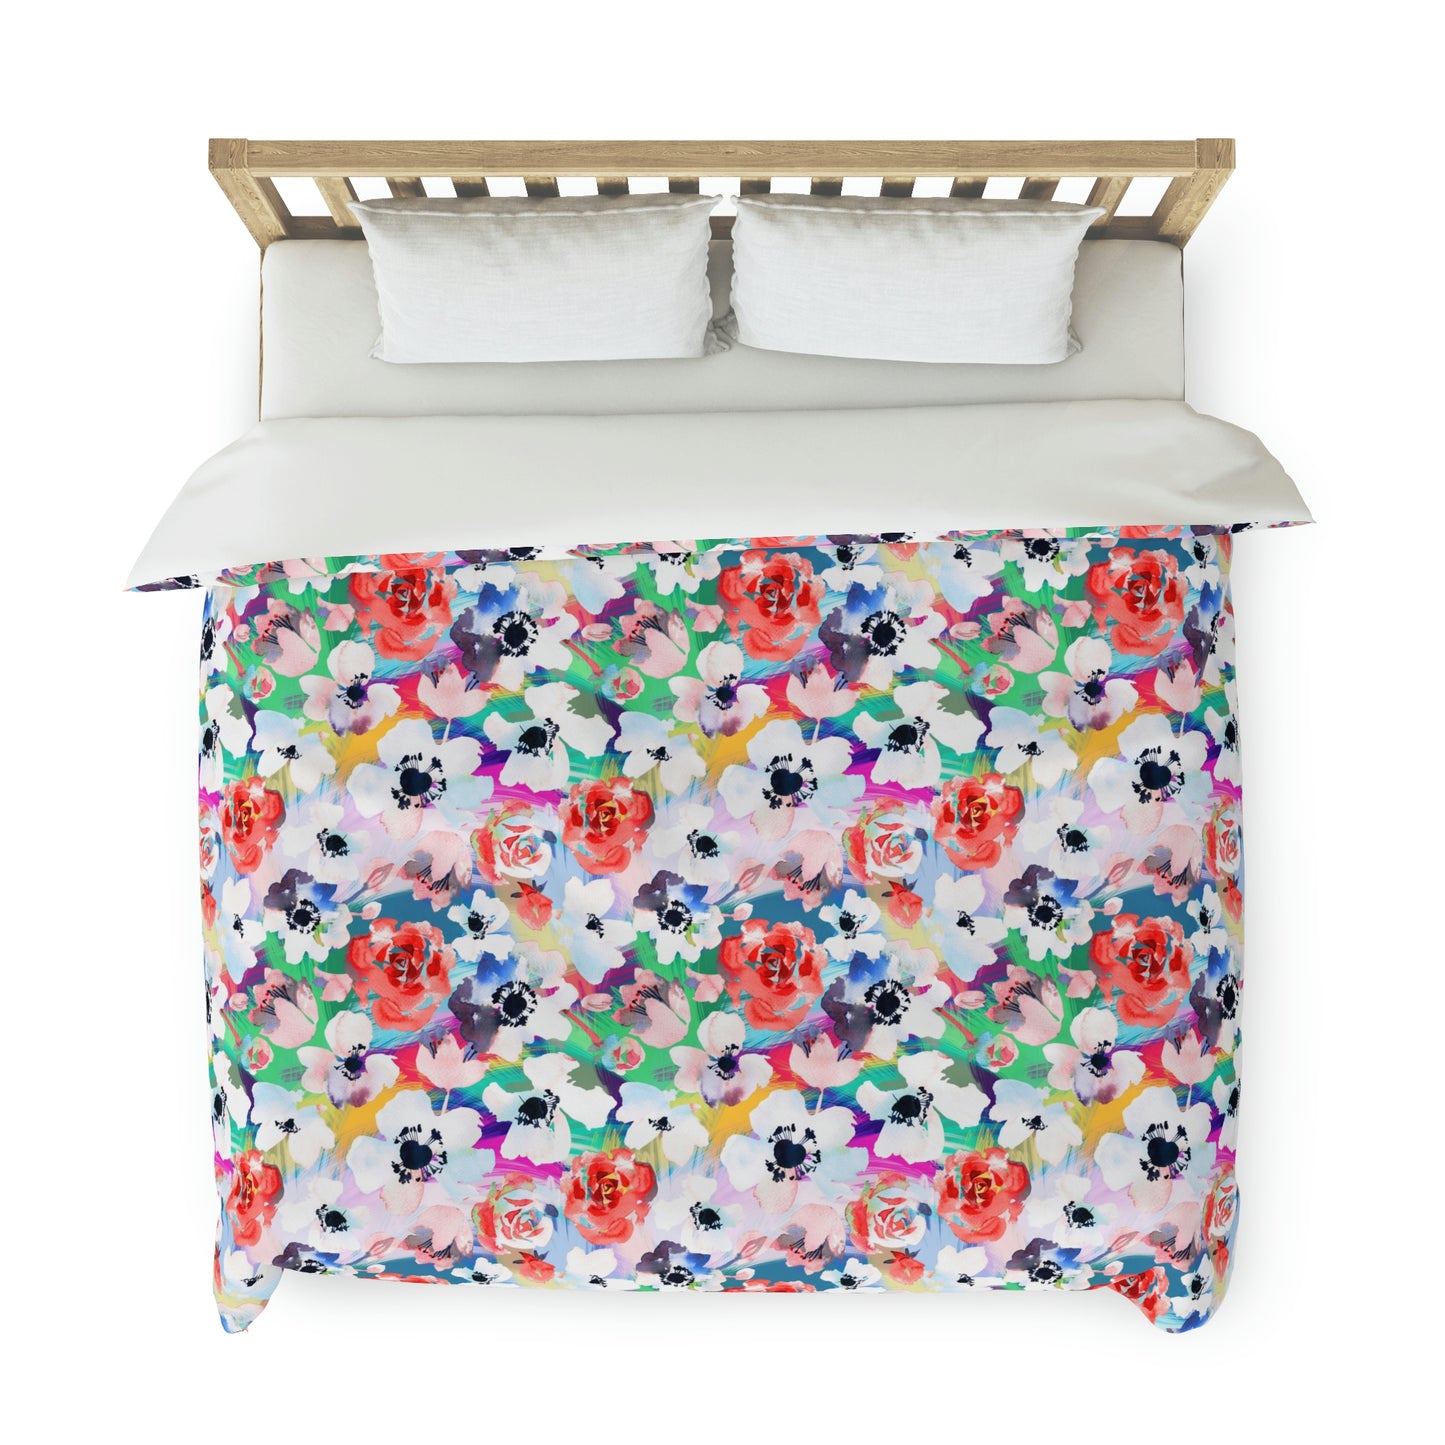 Bold Multicolor Floral Pattern Duvet lying on a bed, microfiber floral duvet cover bedroom accent